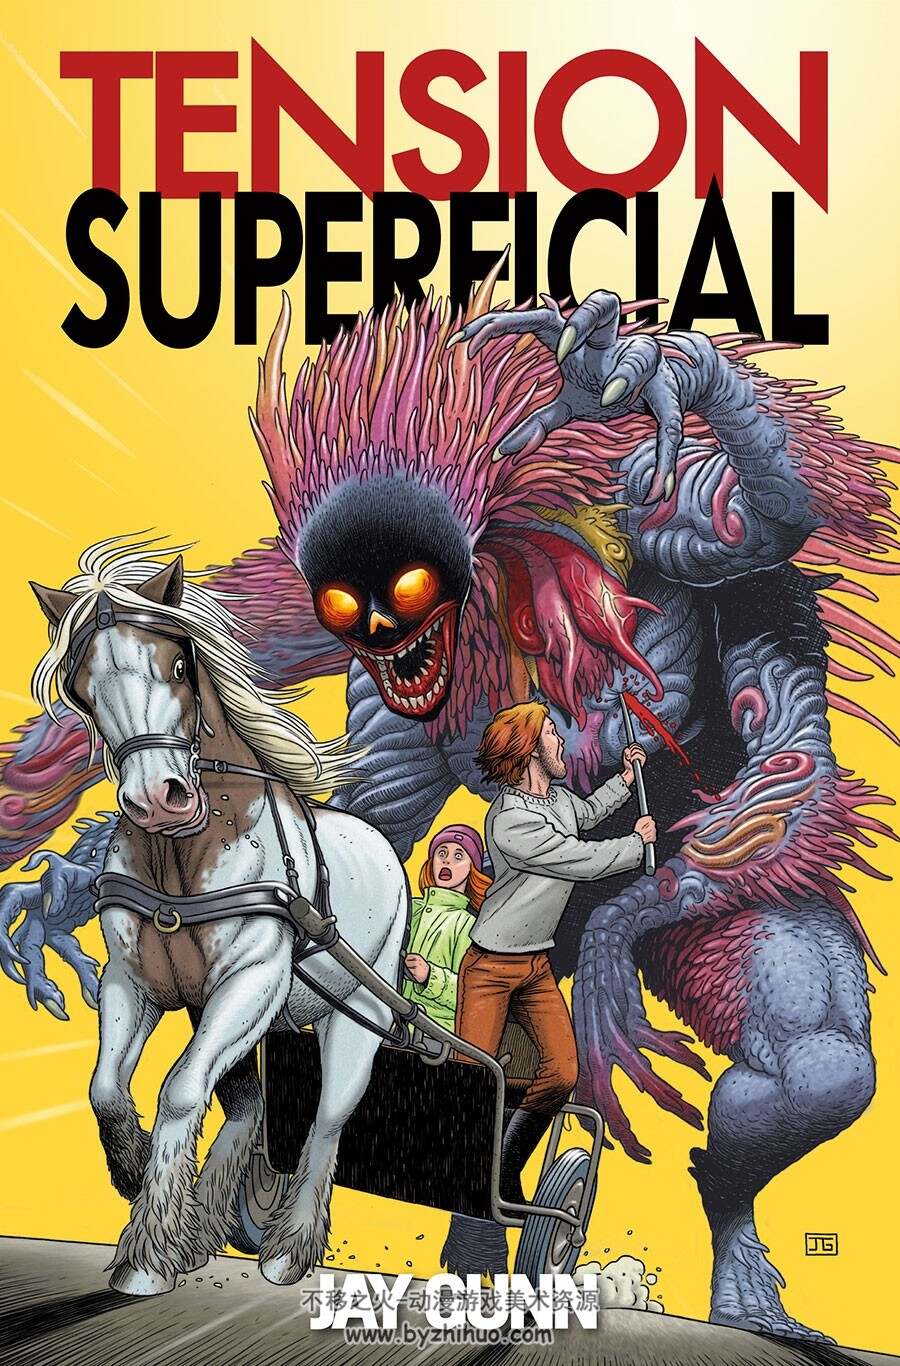 Tensión Superficial 1-5册 Jay Gunn 西班牙语科幻魔幻漫画